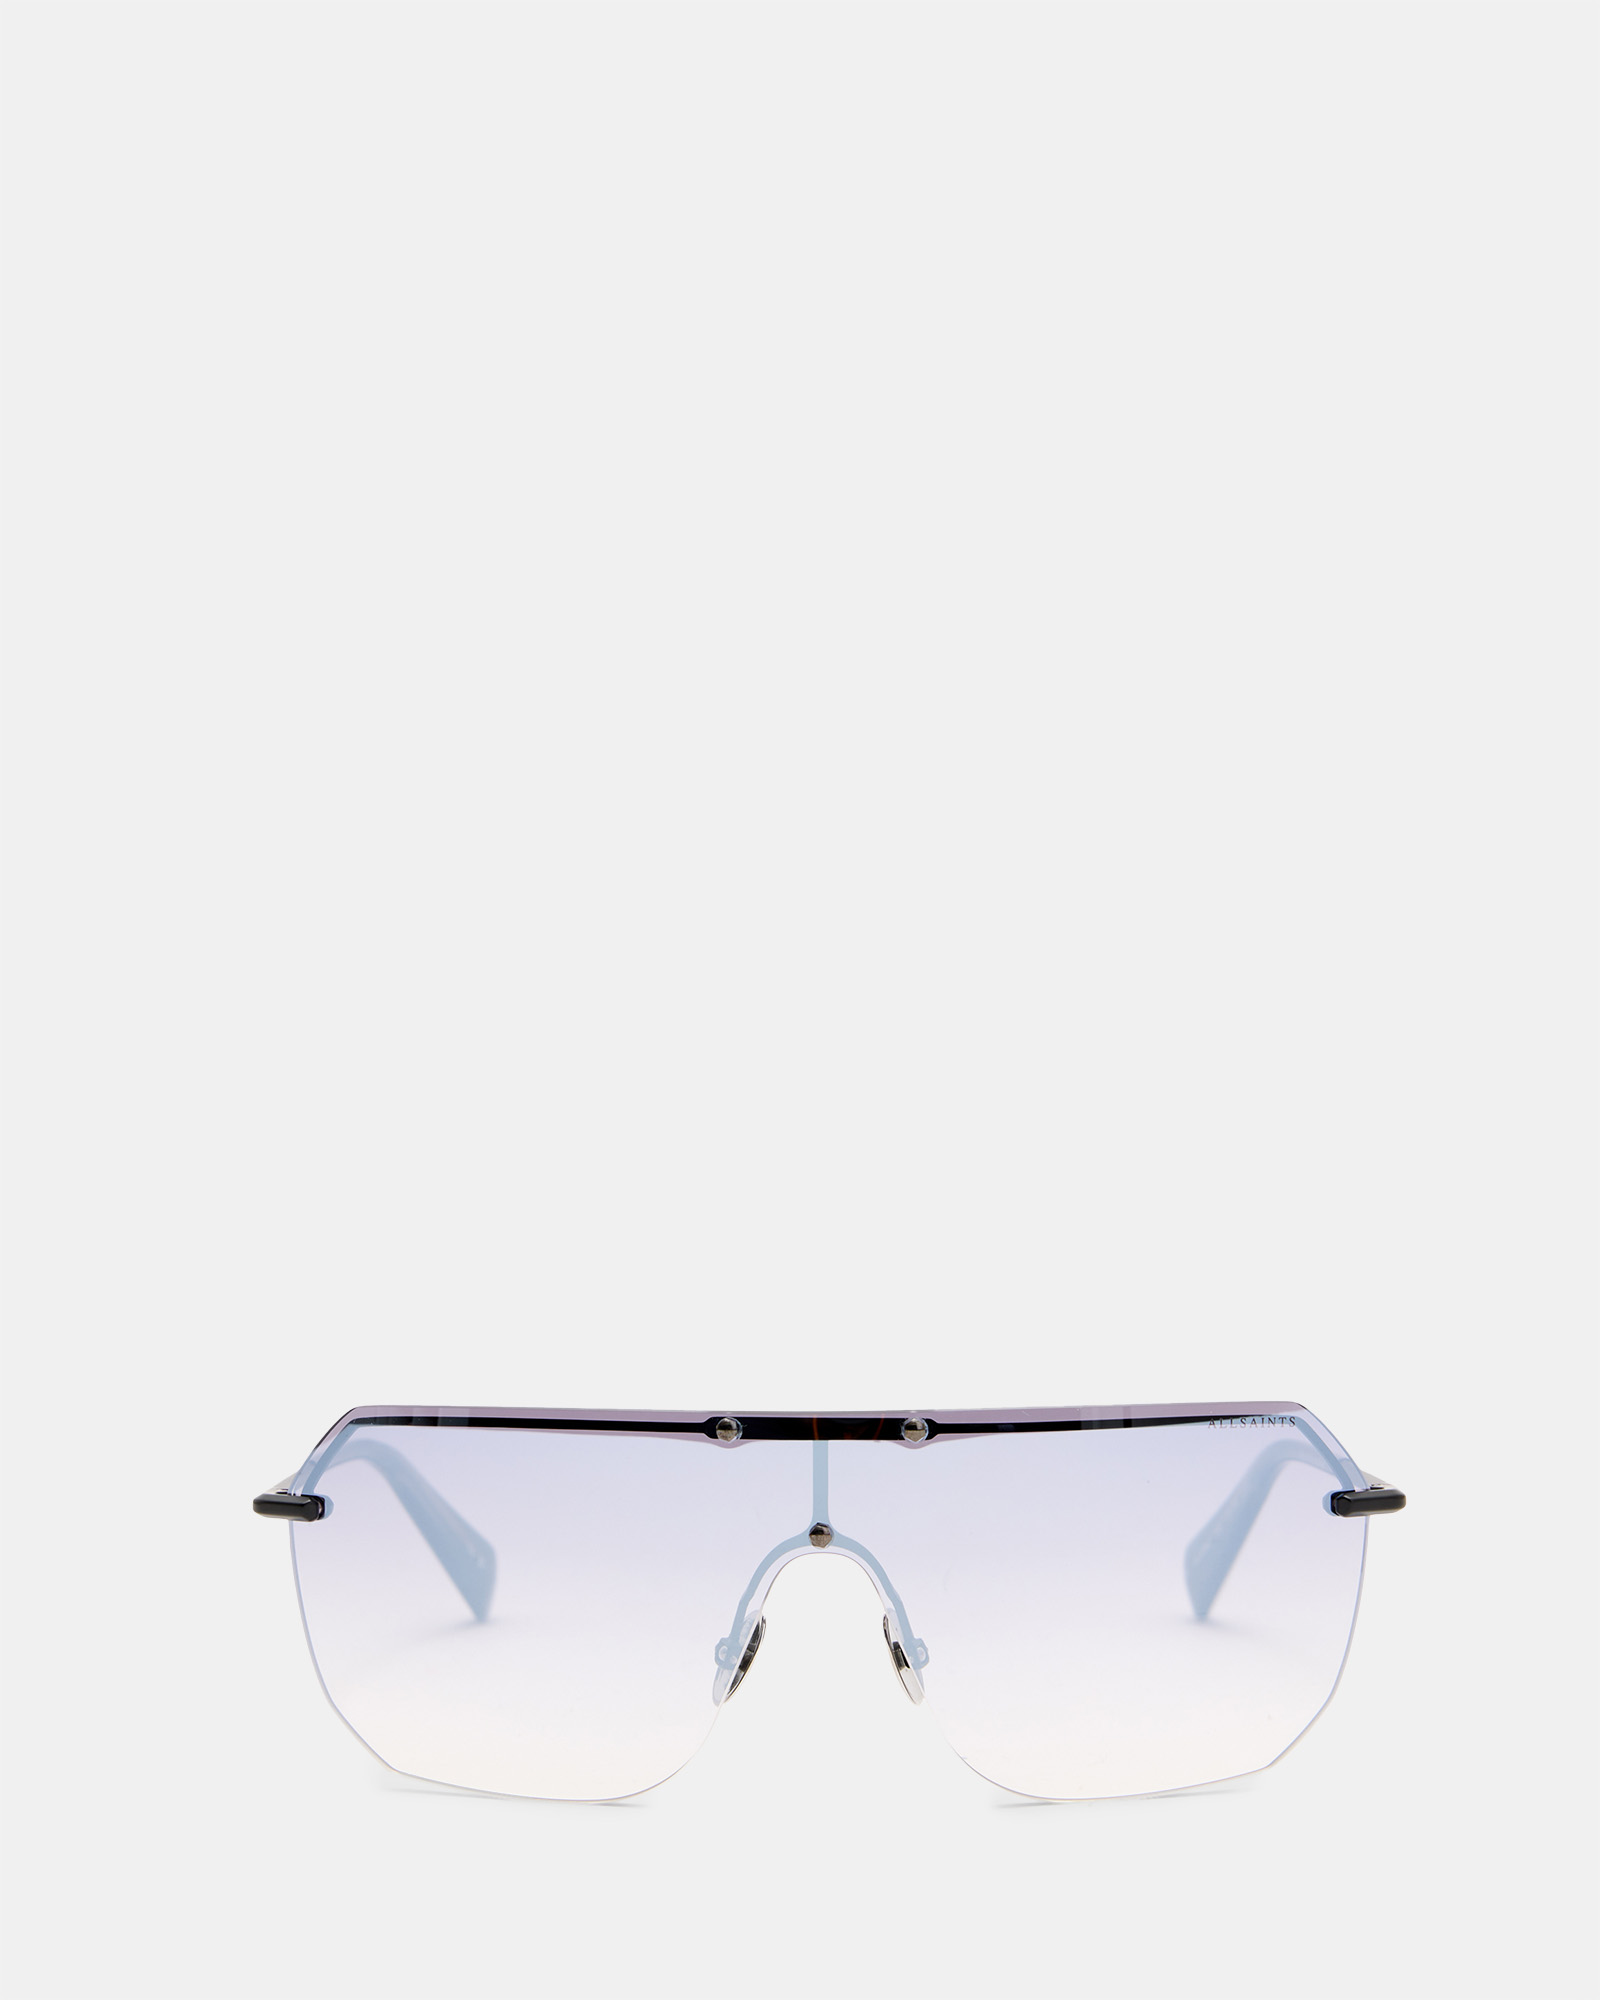 AllSaints Ace Rimless Visor Sunglasses,, Black/matte Black, Size: One Size